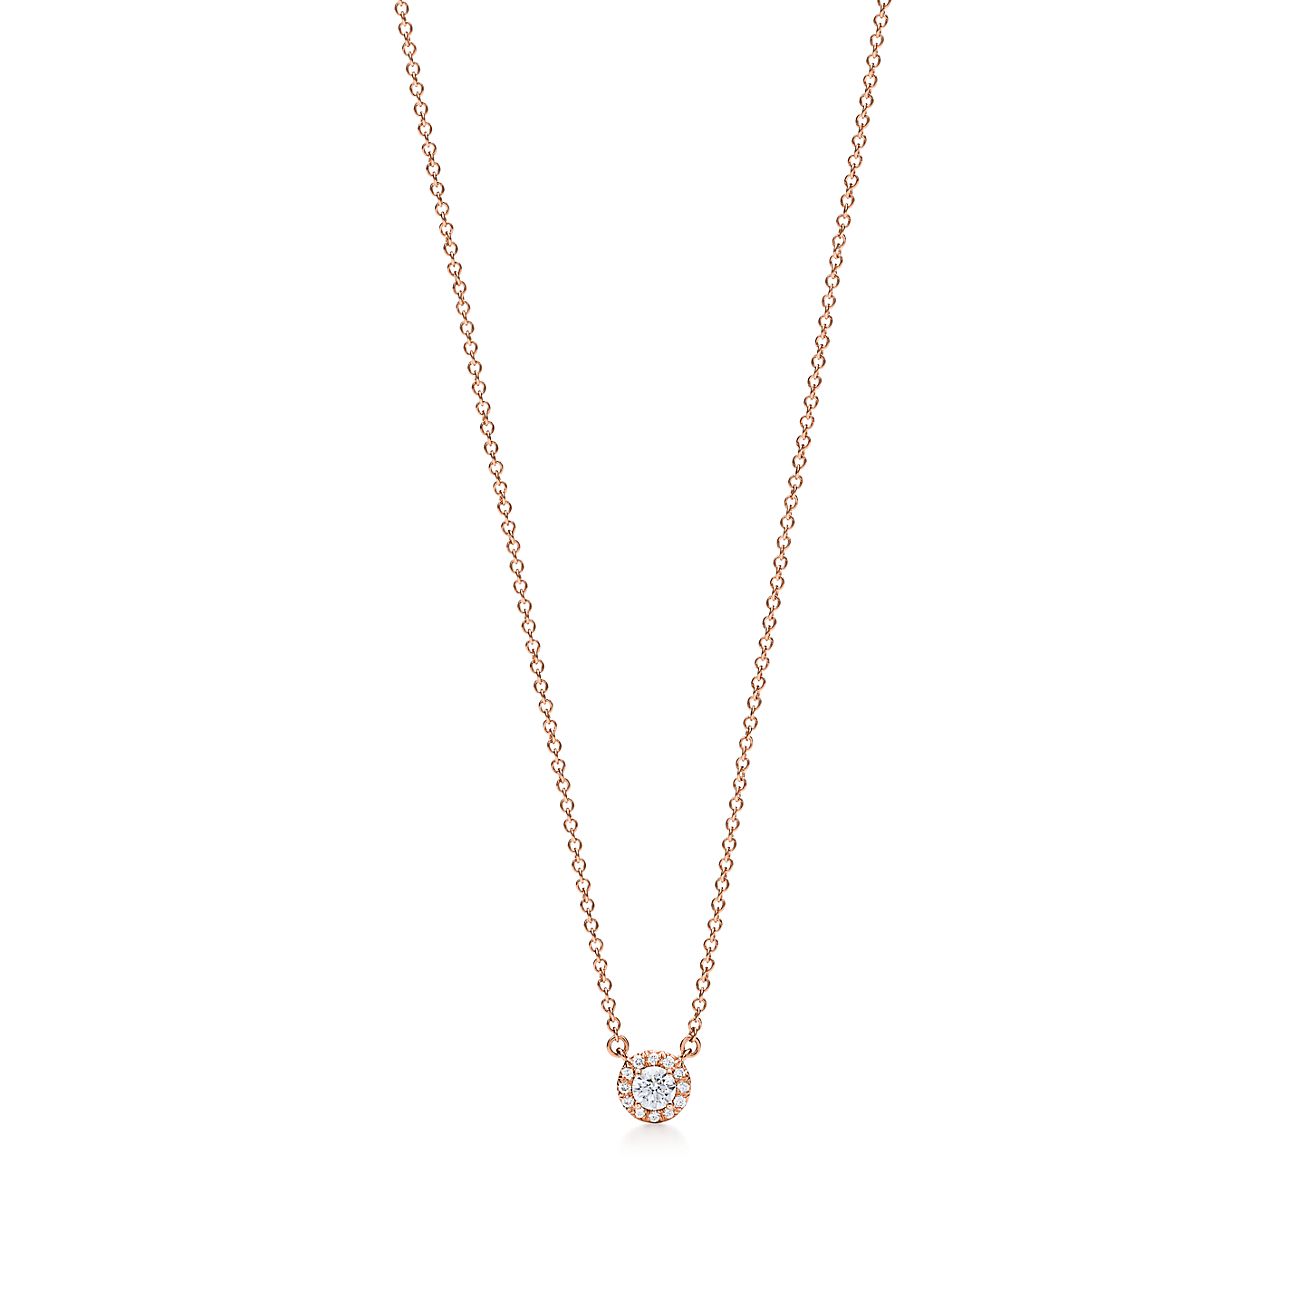 Tiffany Soleste® pendant in 18k rose gold with diamonds. | Tiffany & Co.